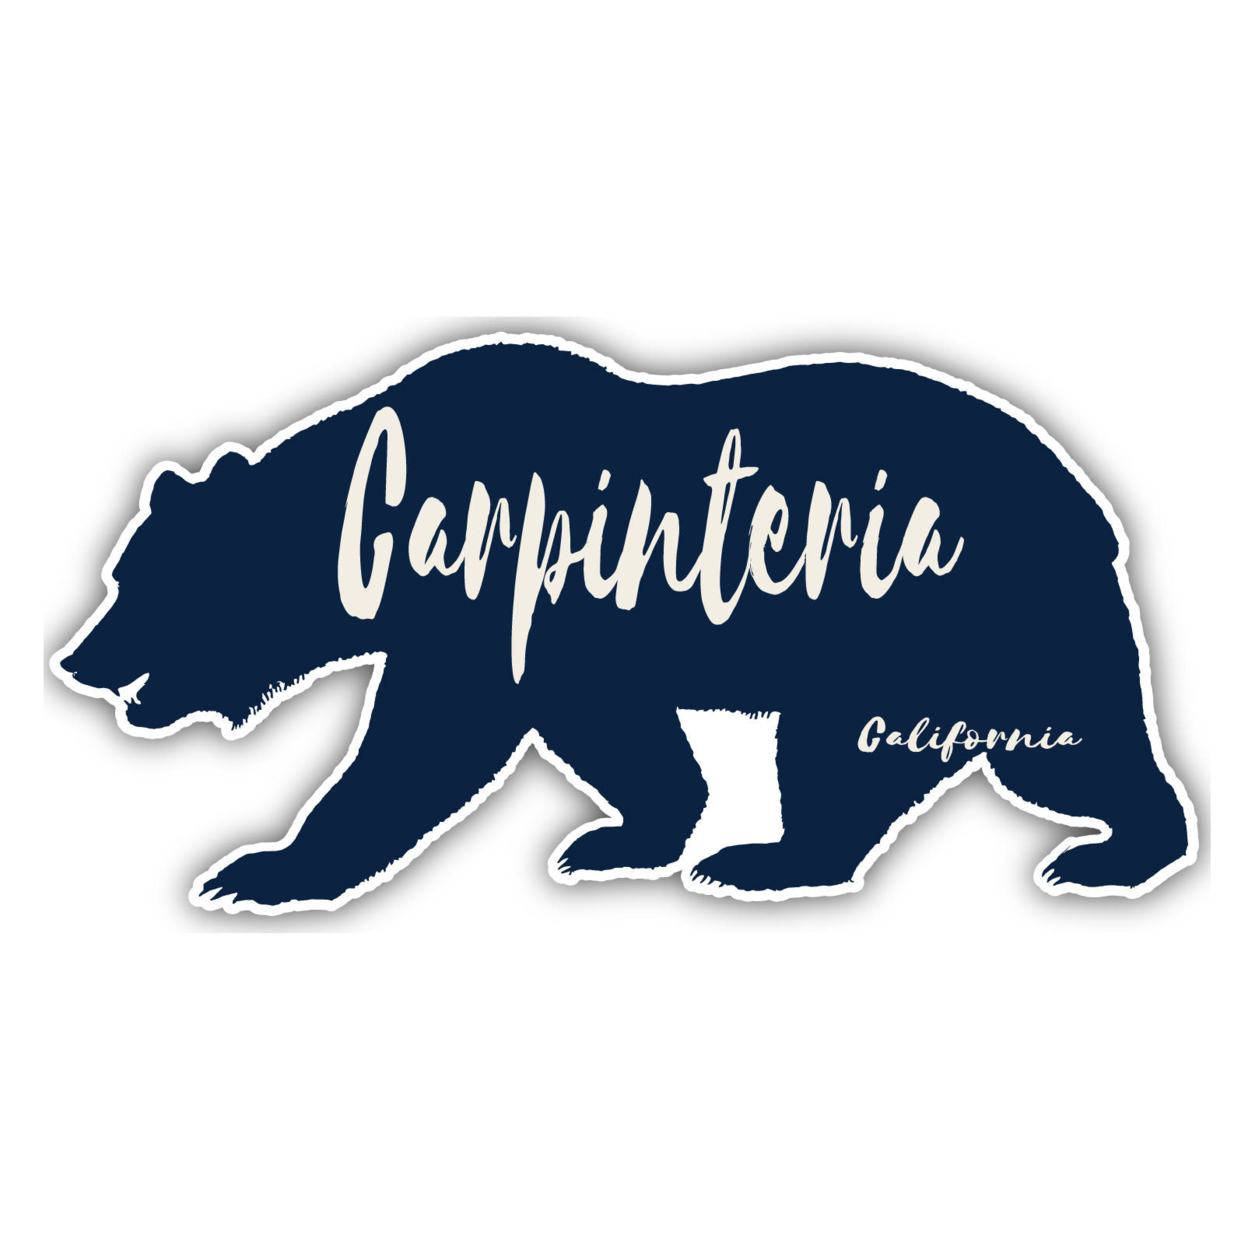 Carpinteria California Souvenir Decorative Stickers (Choose Theme And Size) - Single Unit, 12-Inch, Tent